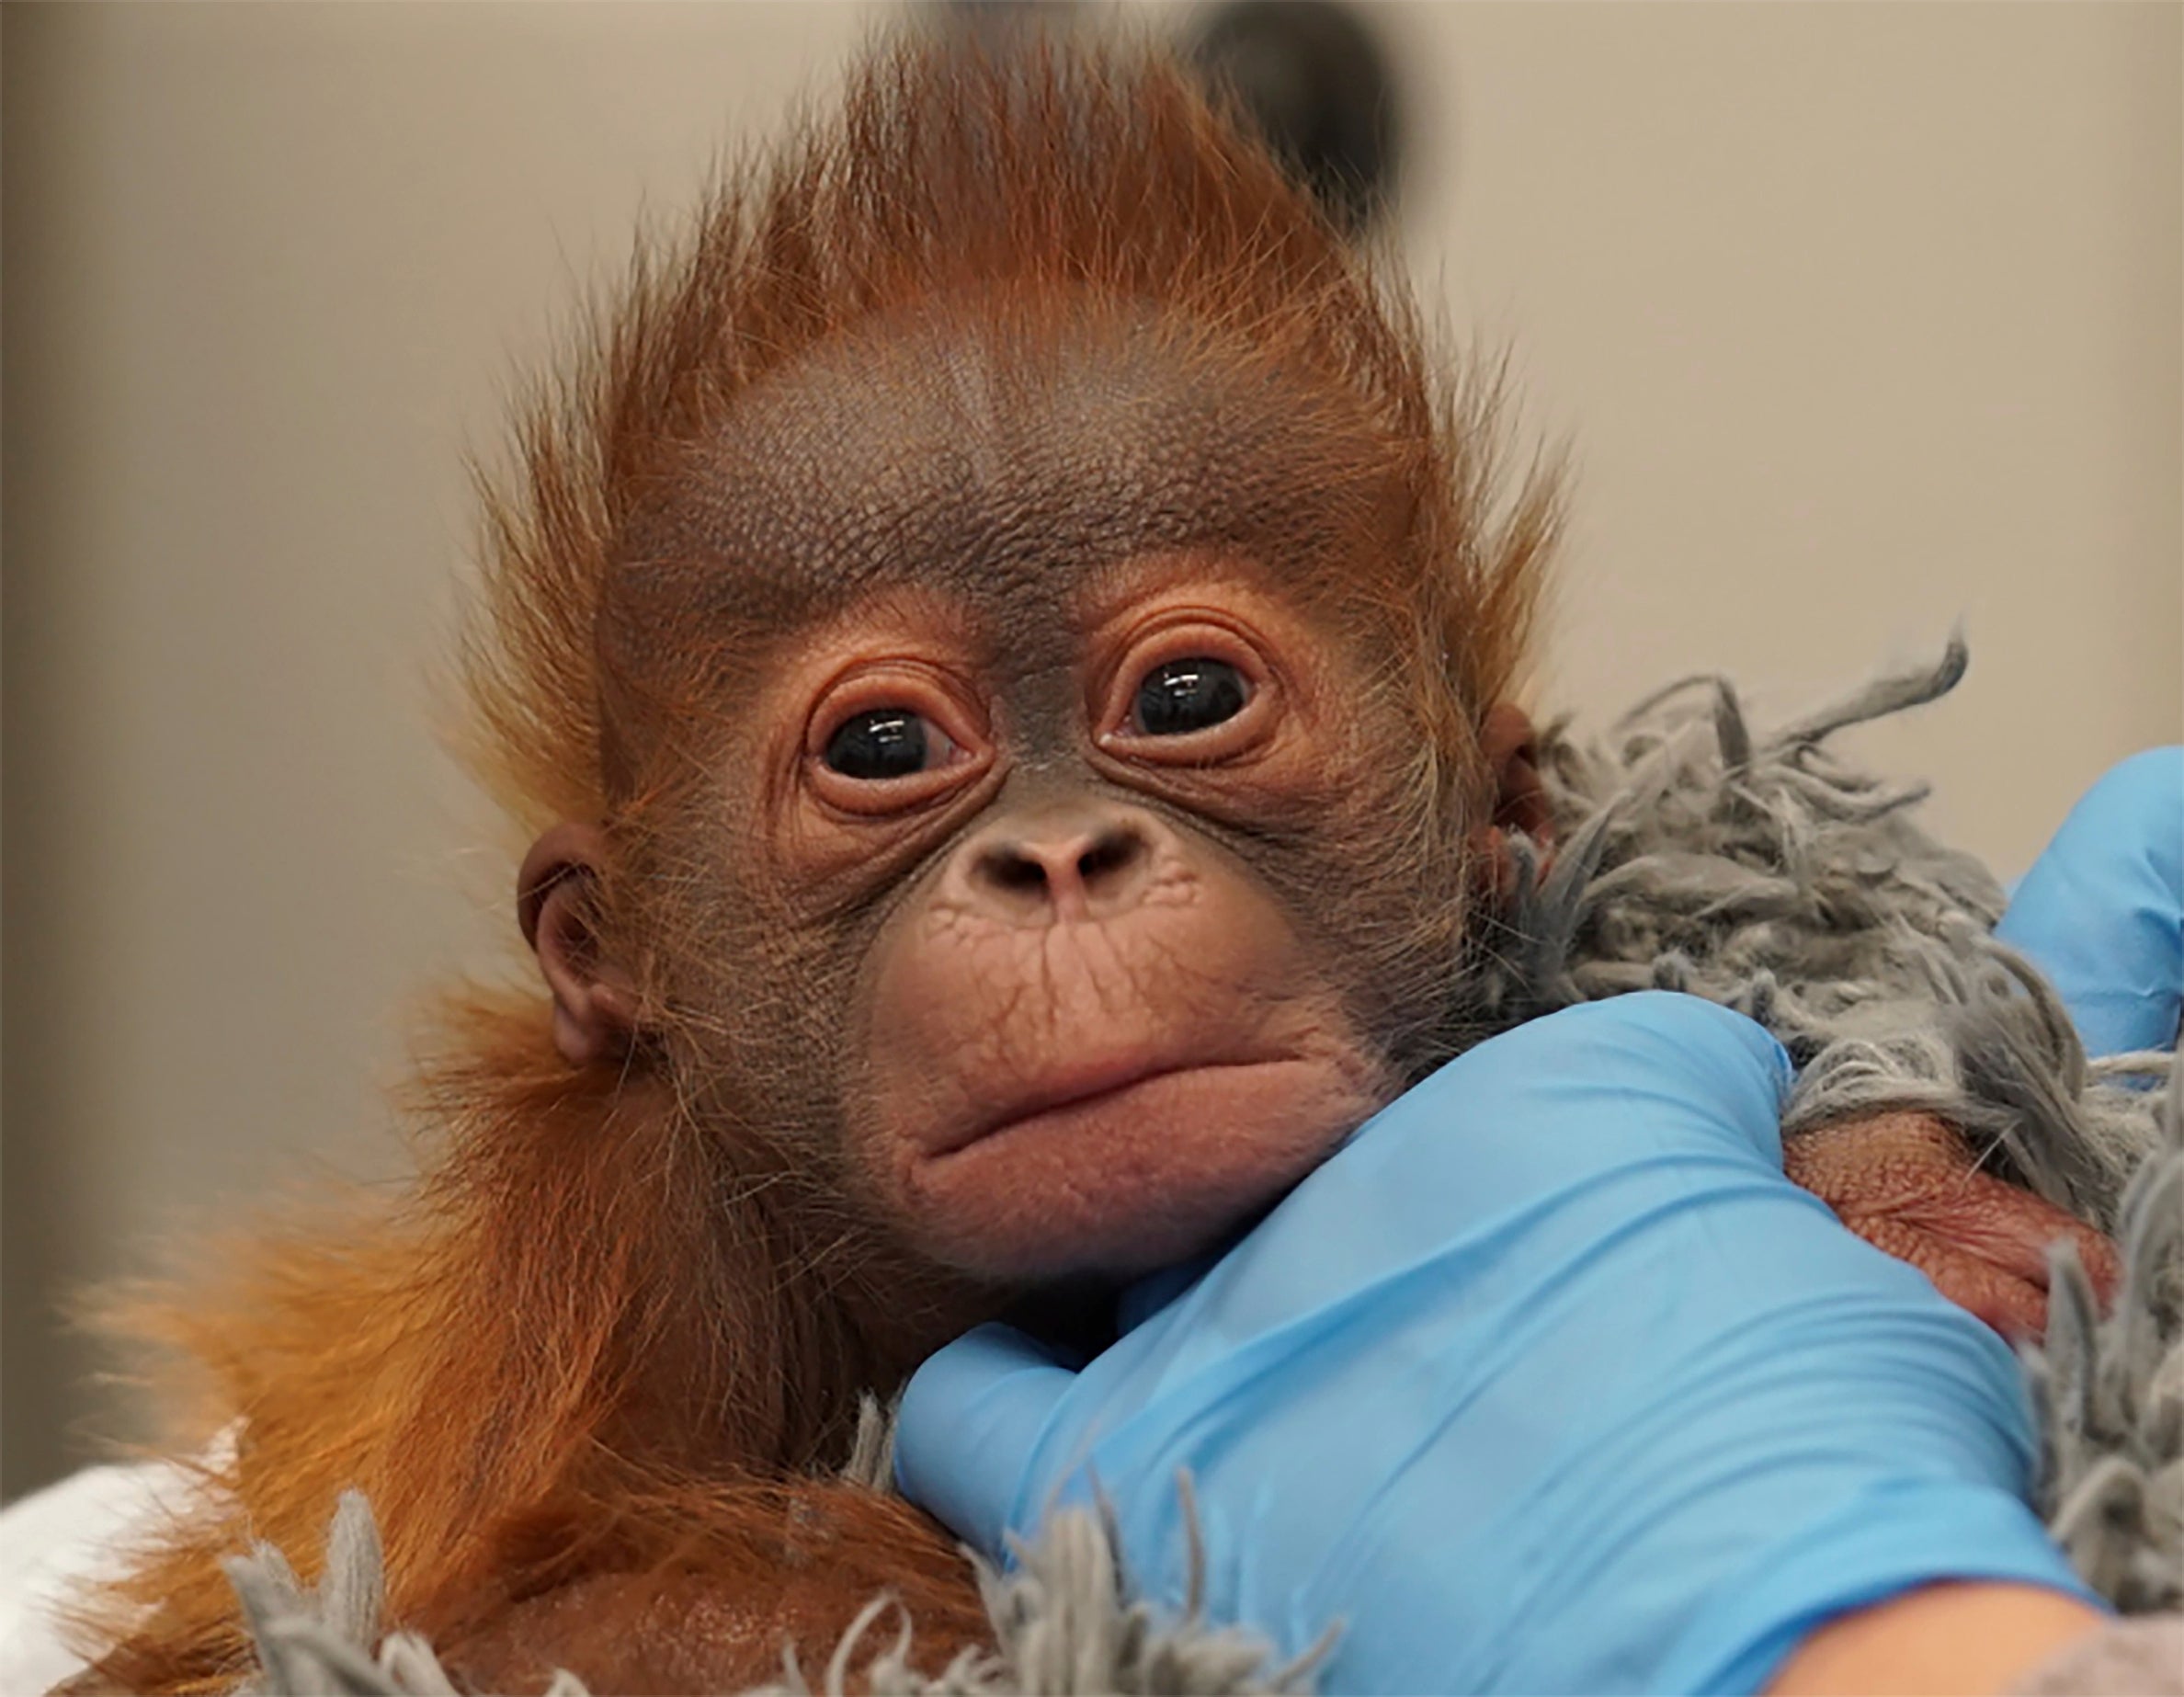 Best name for cute baby orangutan: Rudy, Roux or Maymuun? | The